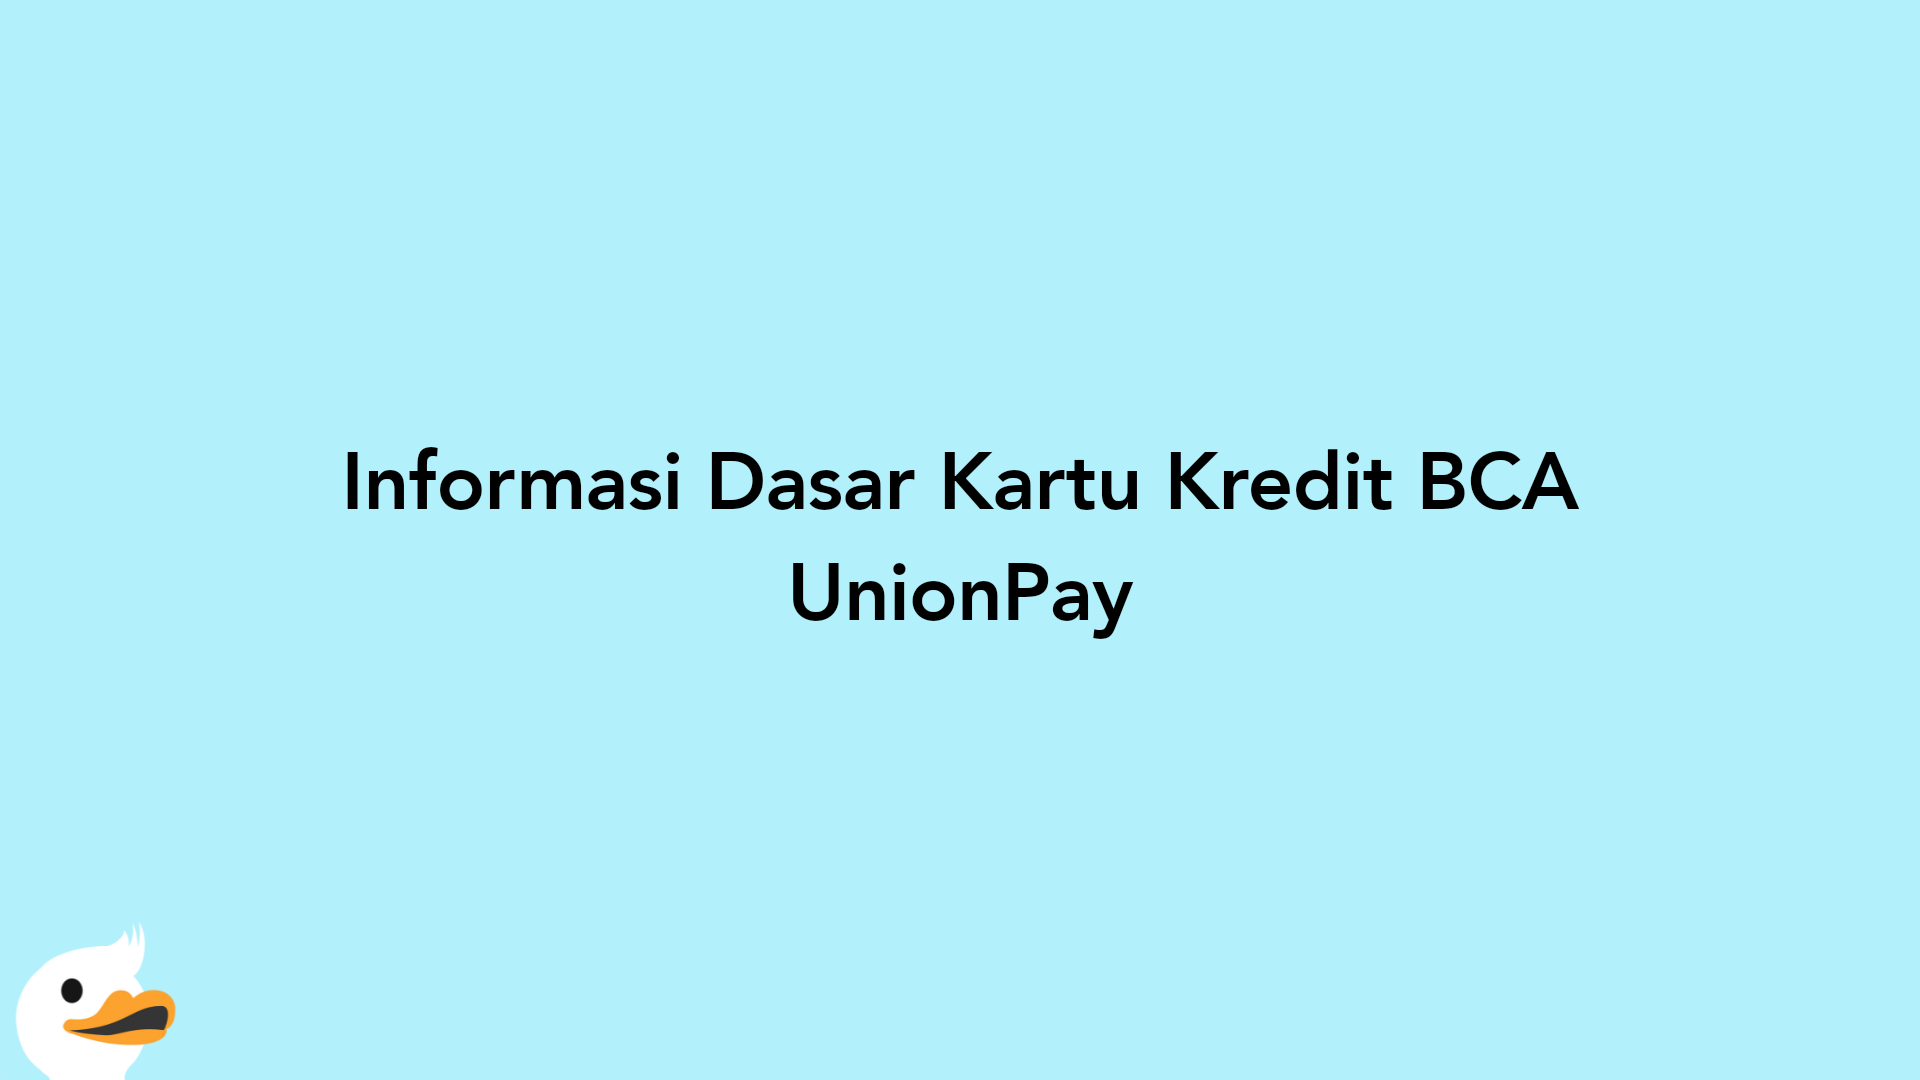 Informasi Dasar Kartu Kredit BCA UnionPay